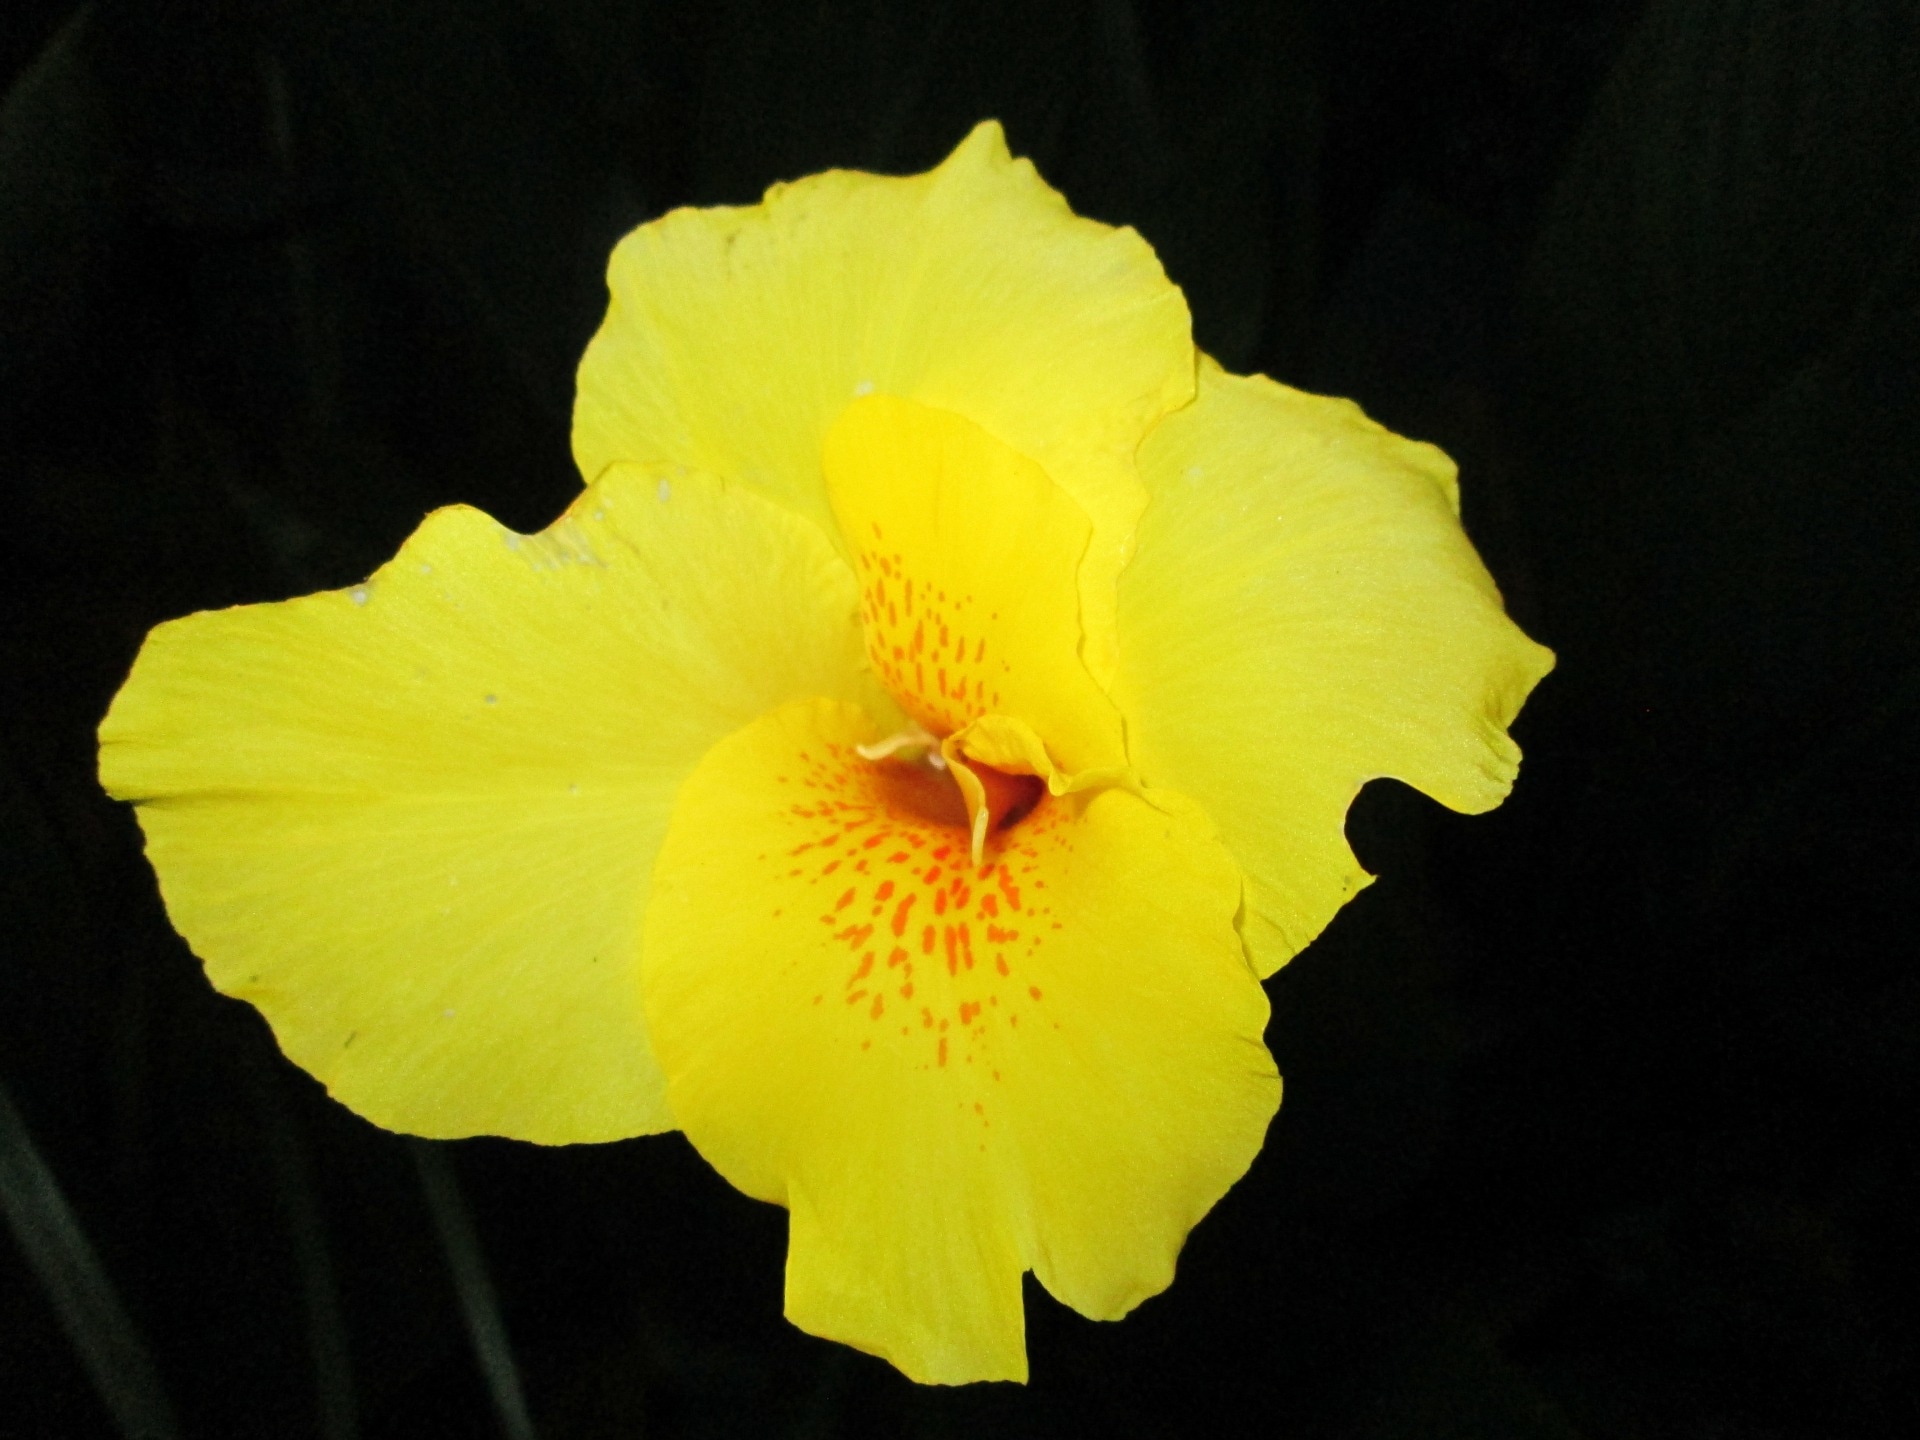 yellow 4 petaled flower